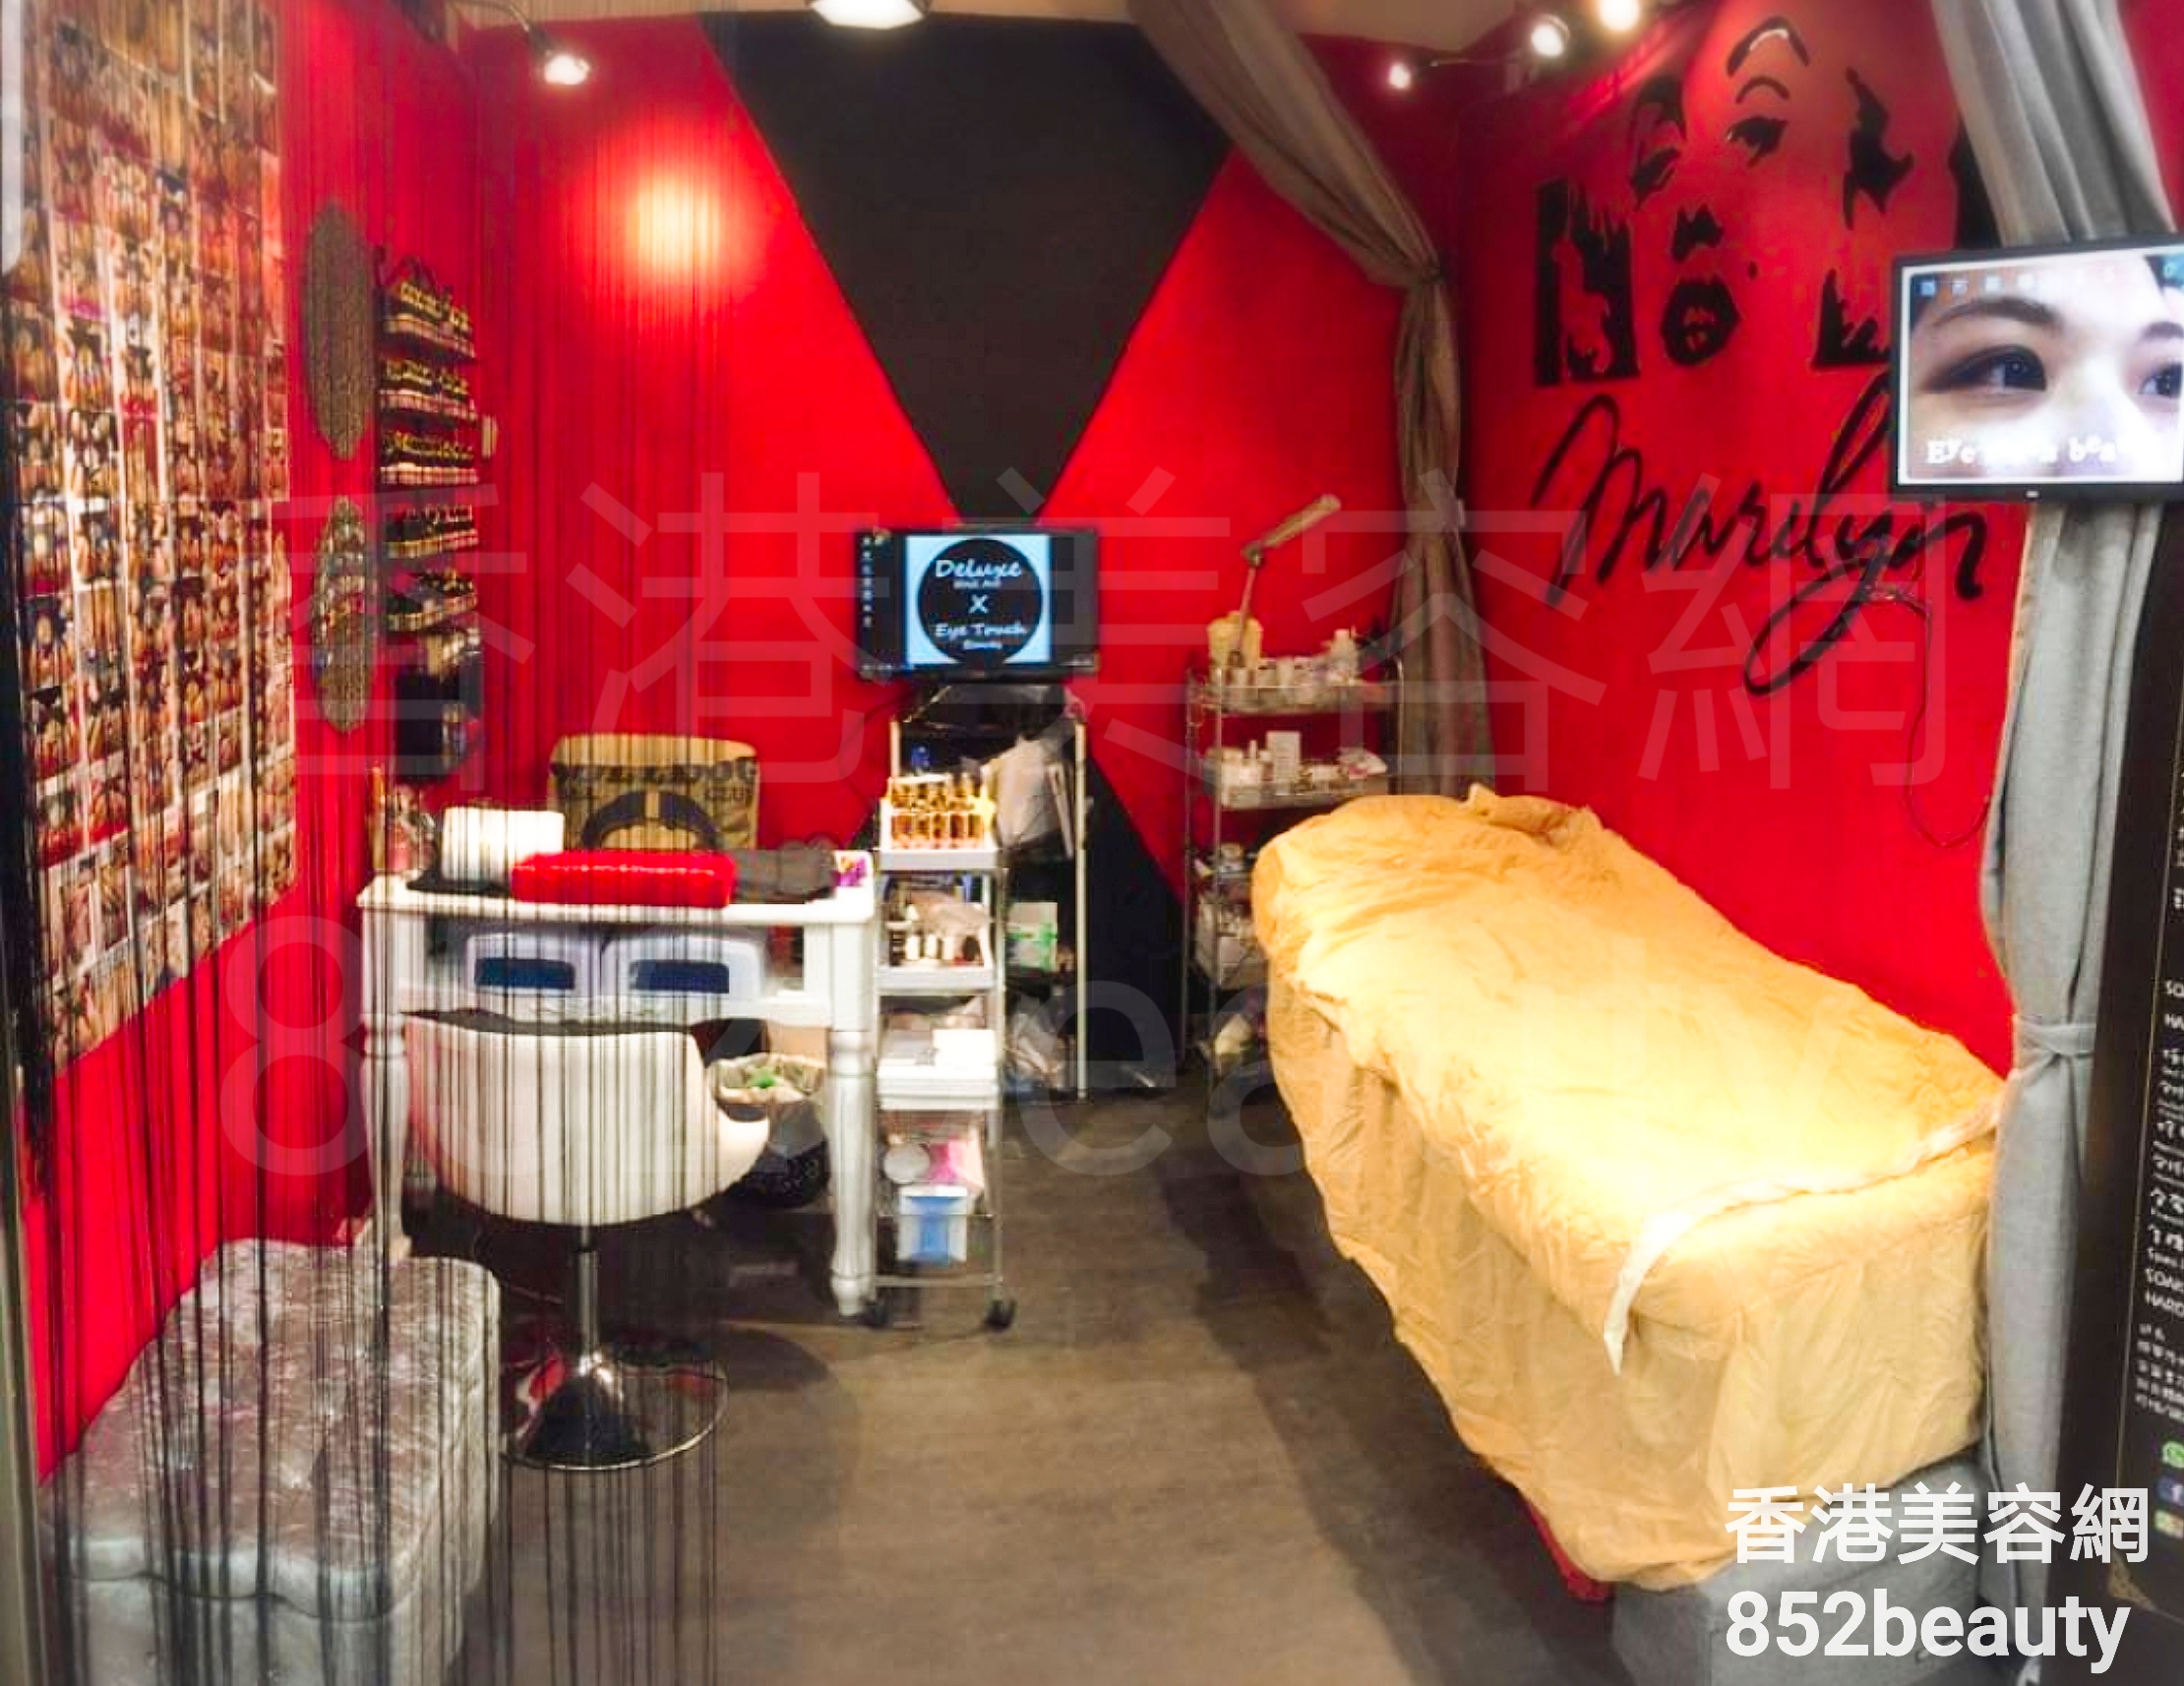 香港美容网 Hong Kong Beauty Salon 美容院 / 美容师: Deluxe Nail Art